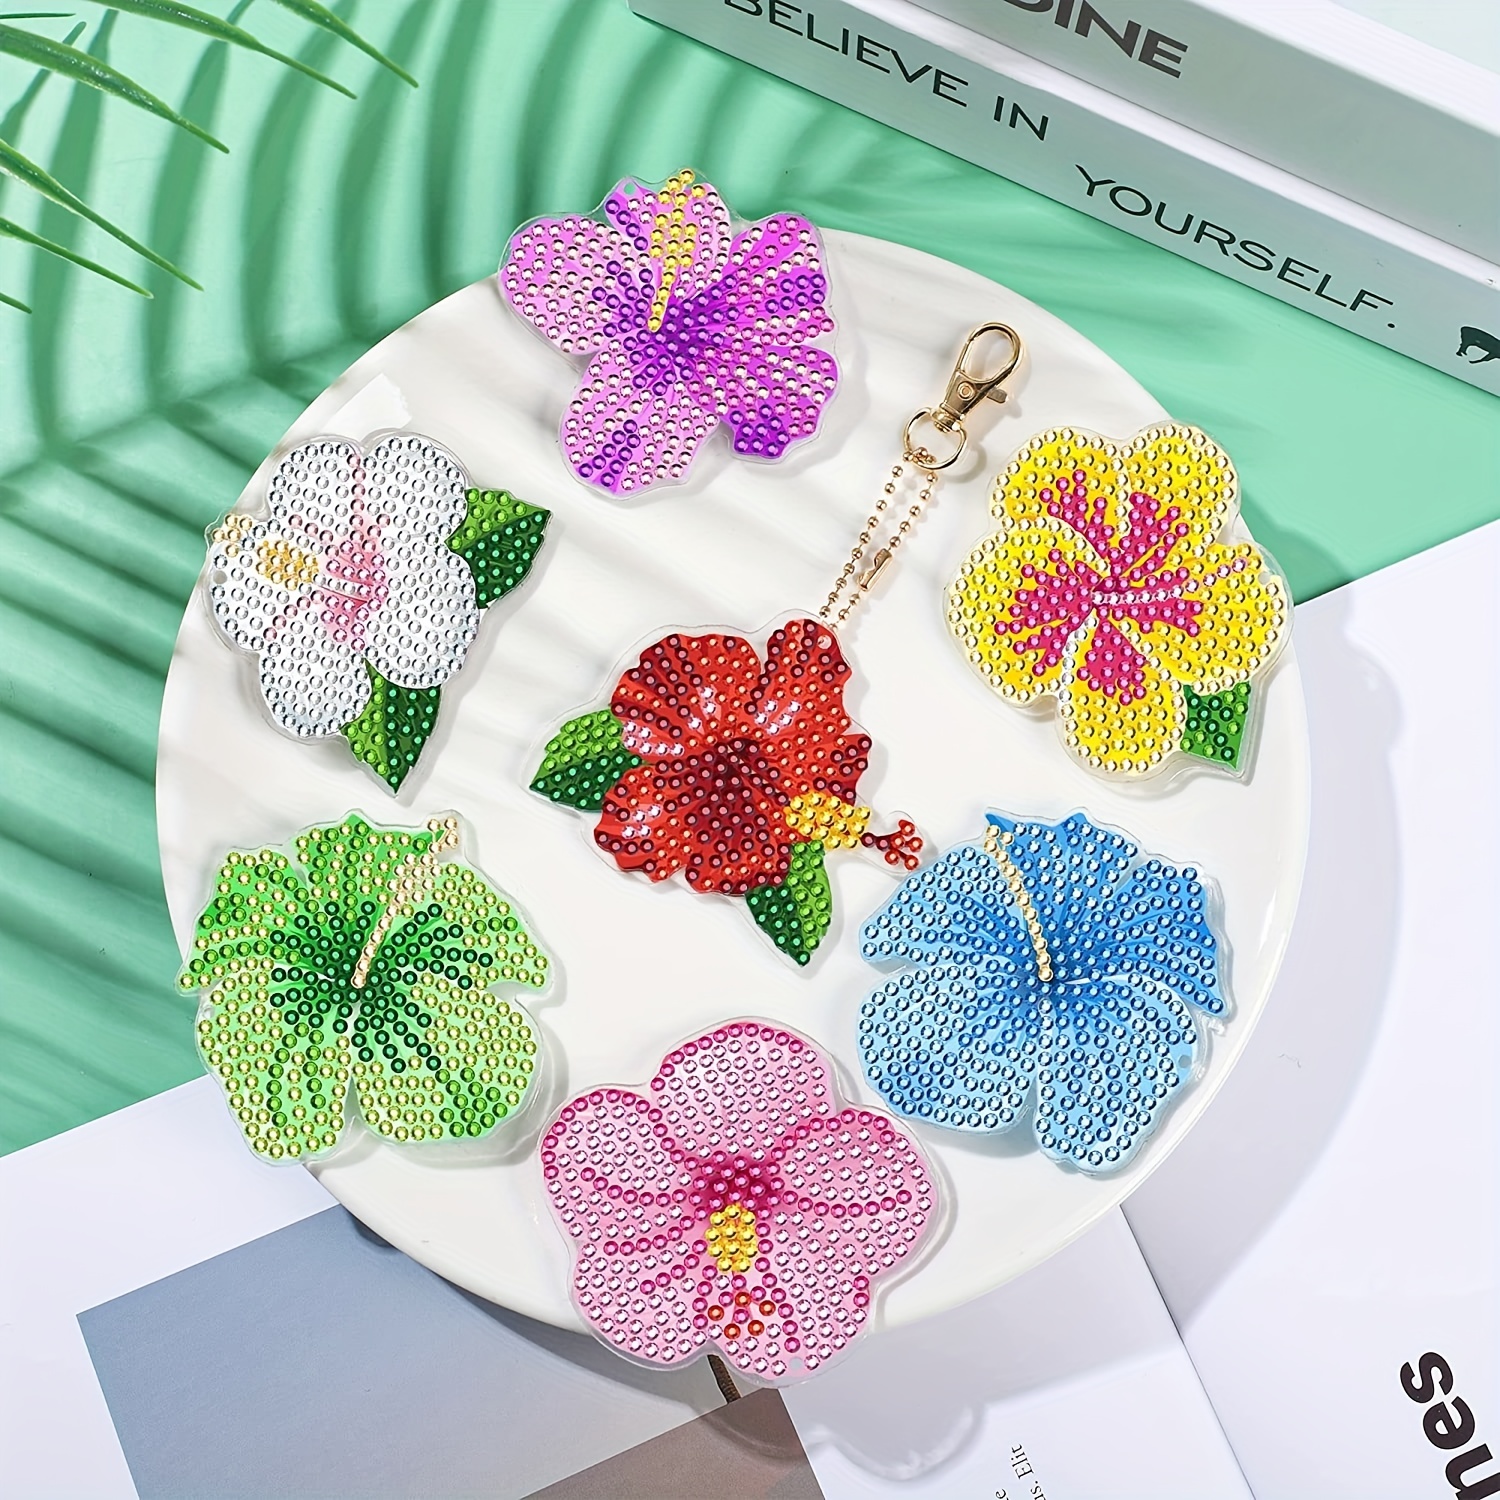 Tropical Flowers, 5D Diamond Painting Kits